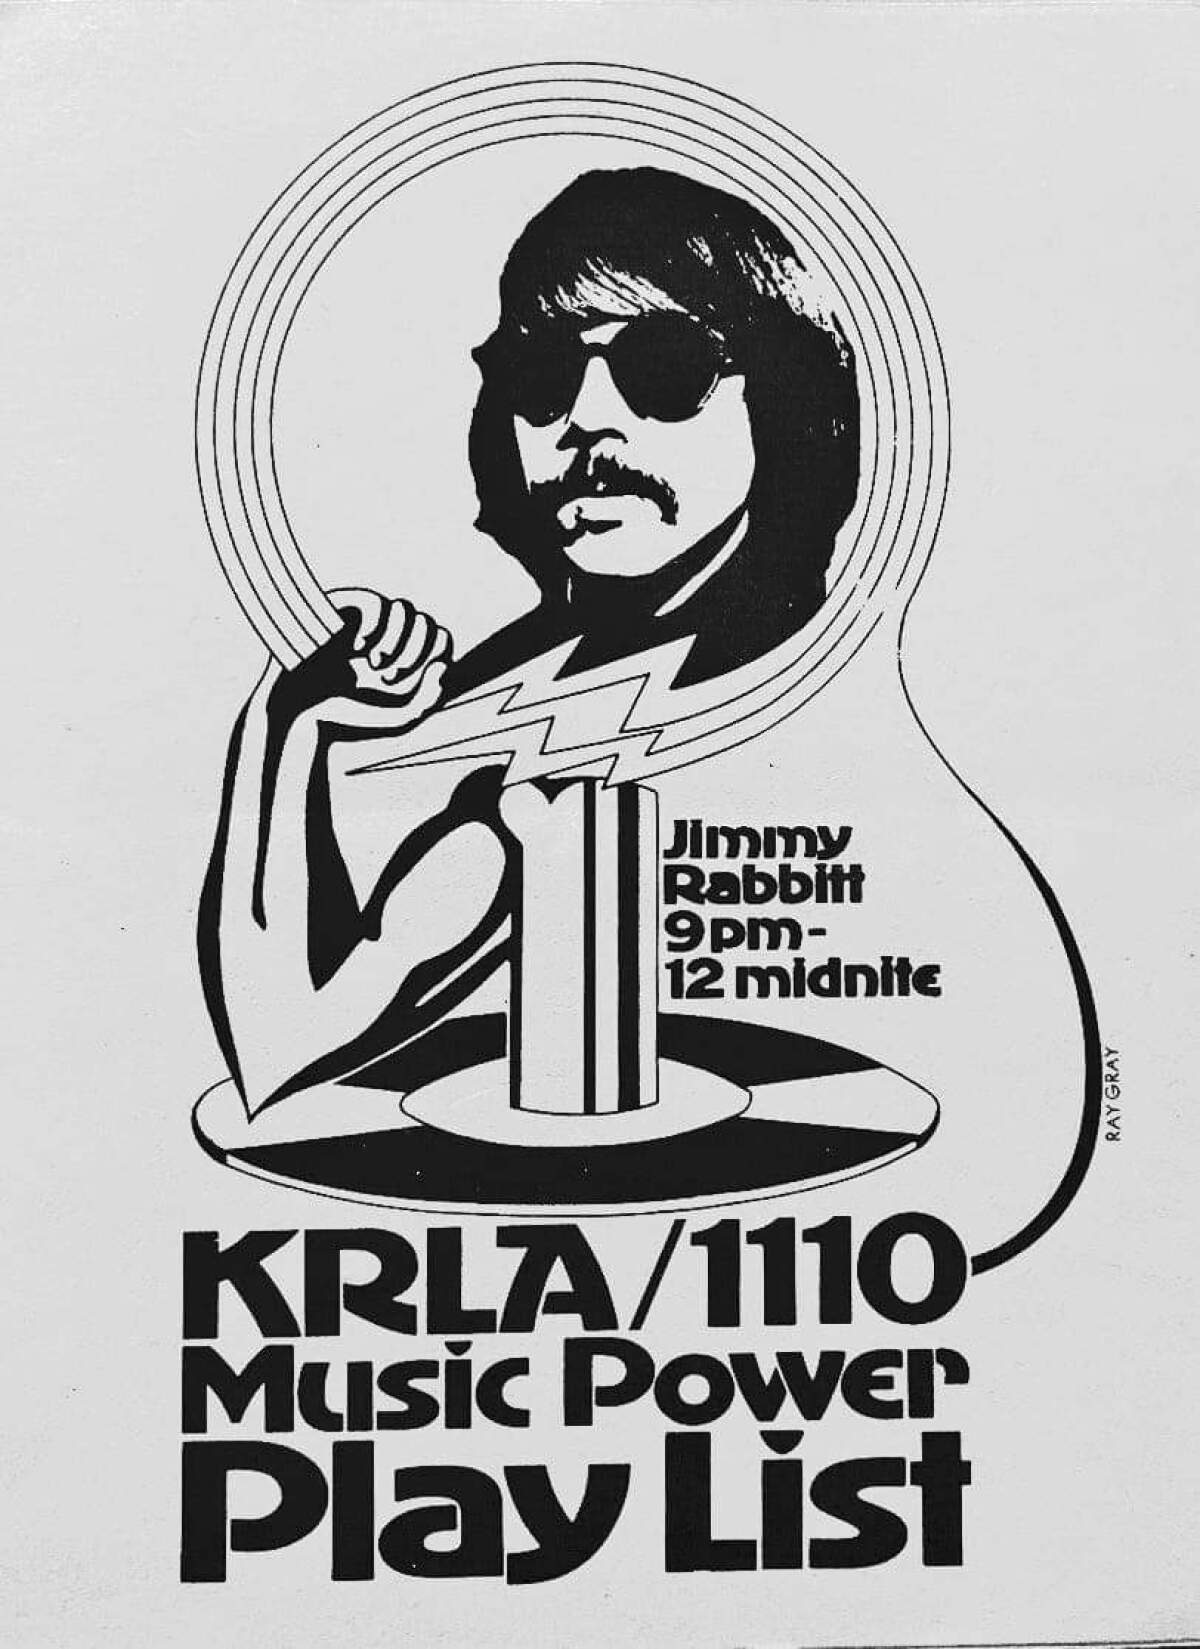 A poster of Jimmy Rabbitt on KRLA.